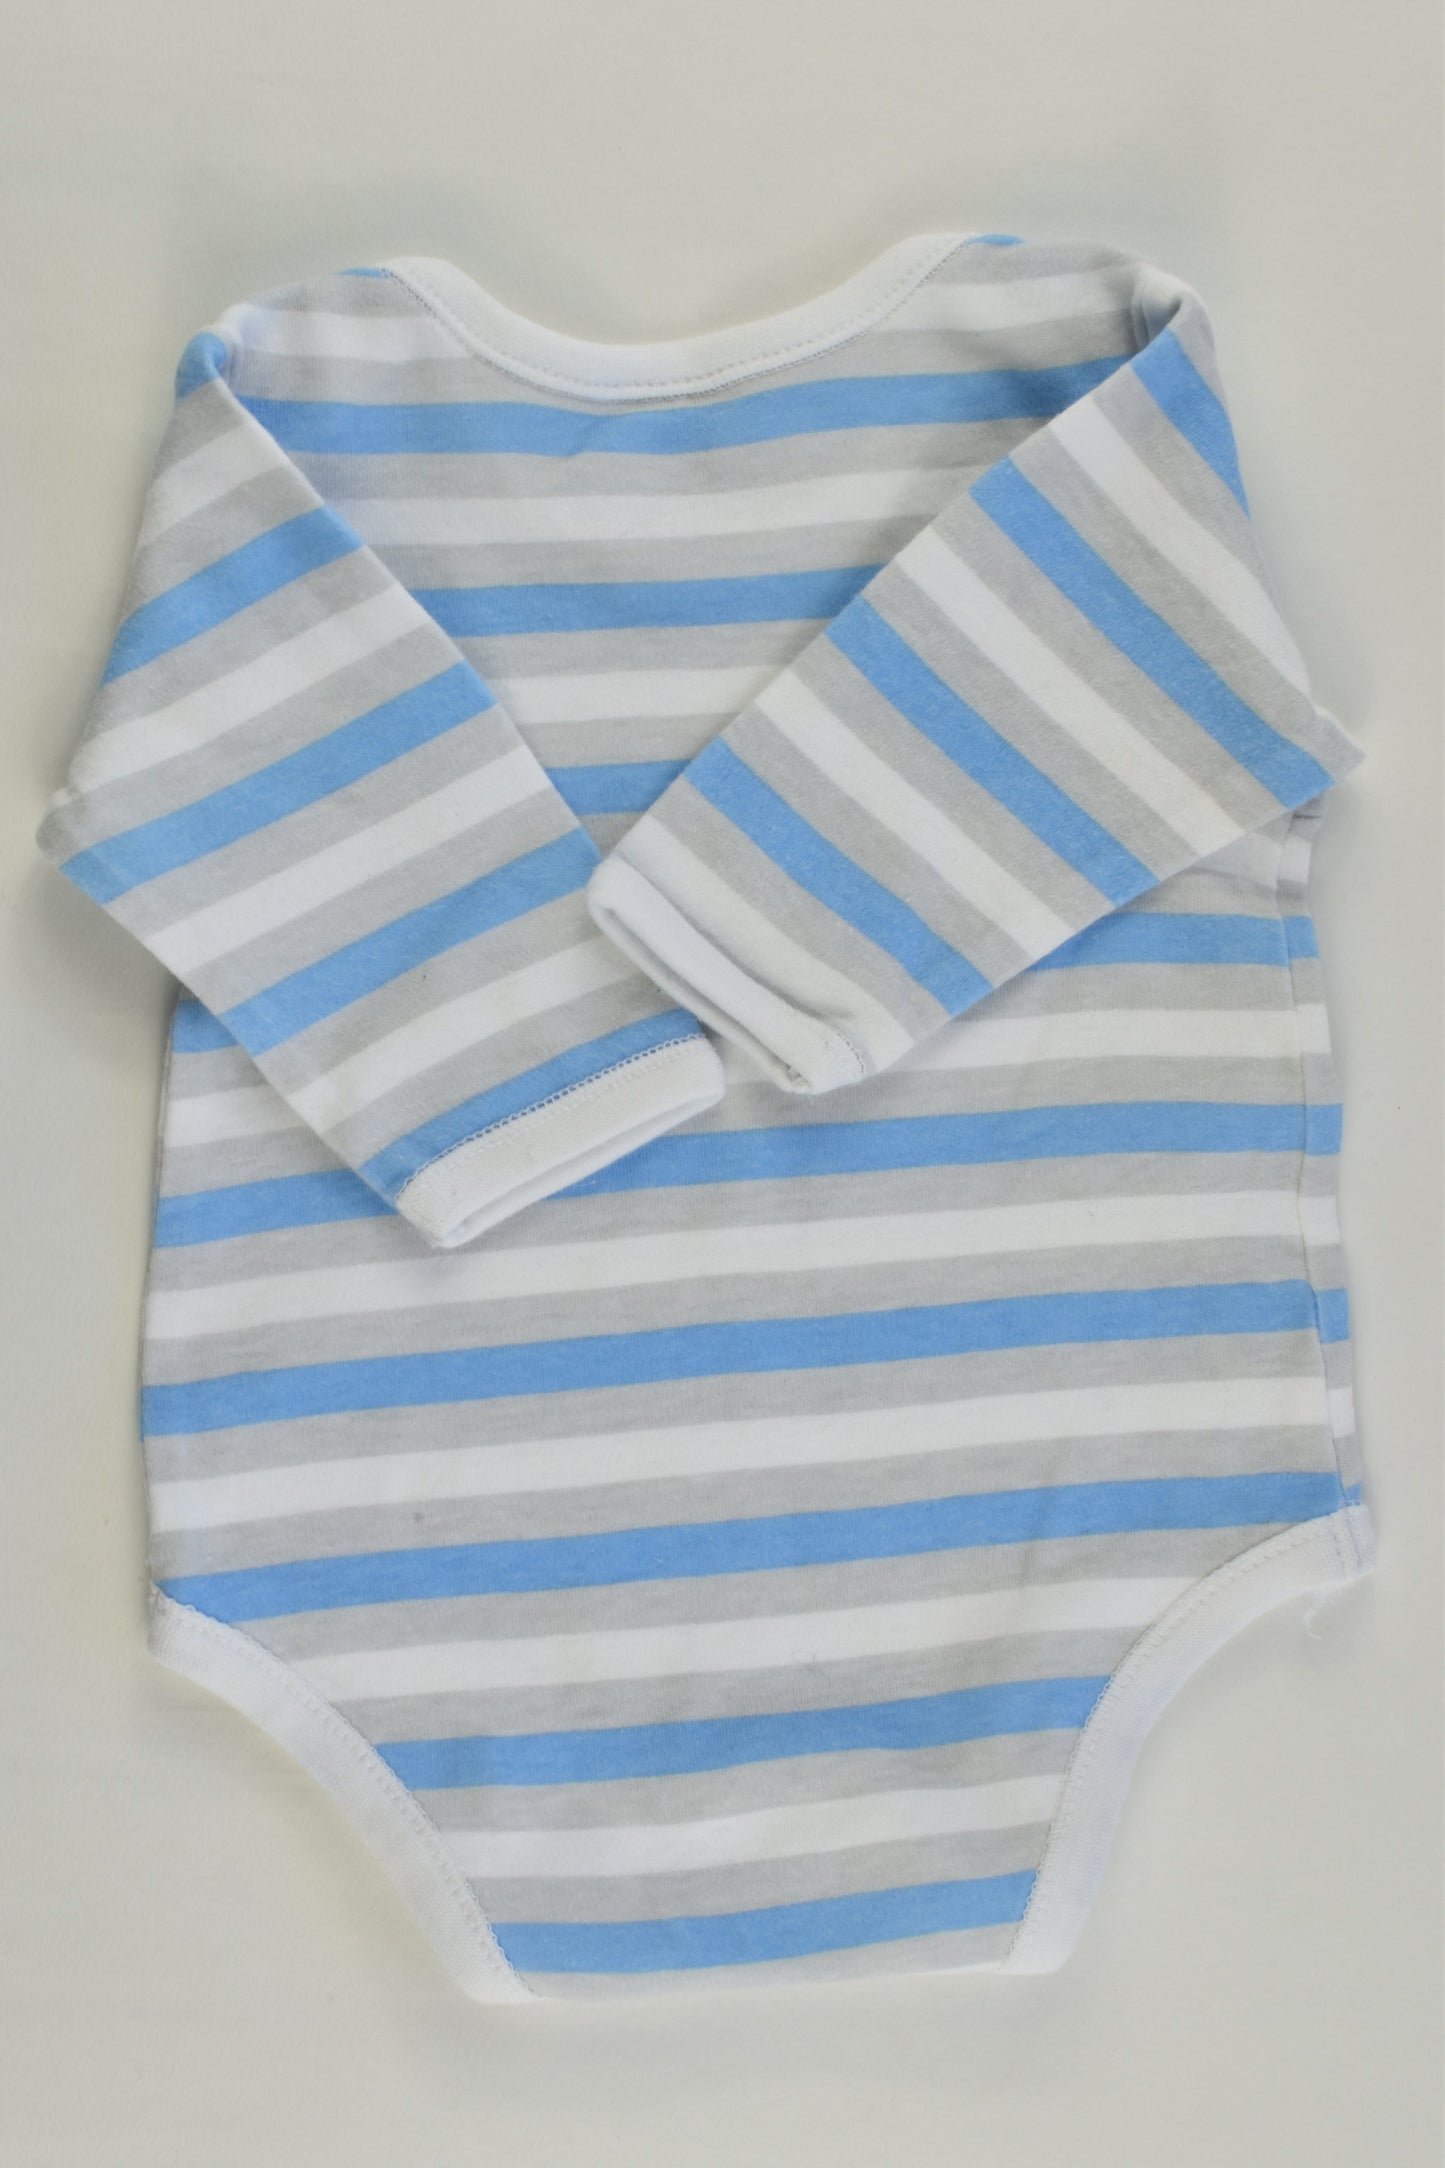 Best & Less Size 000 (0-3 months) Striped Bodysuit